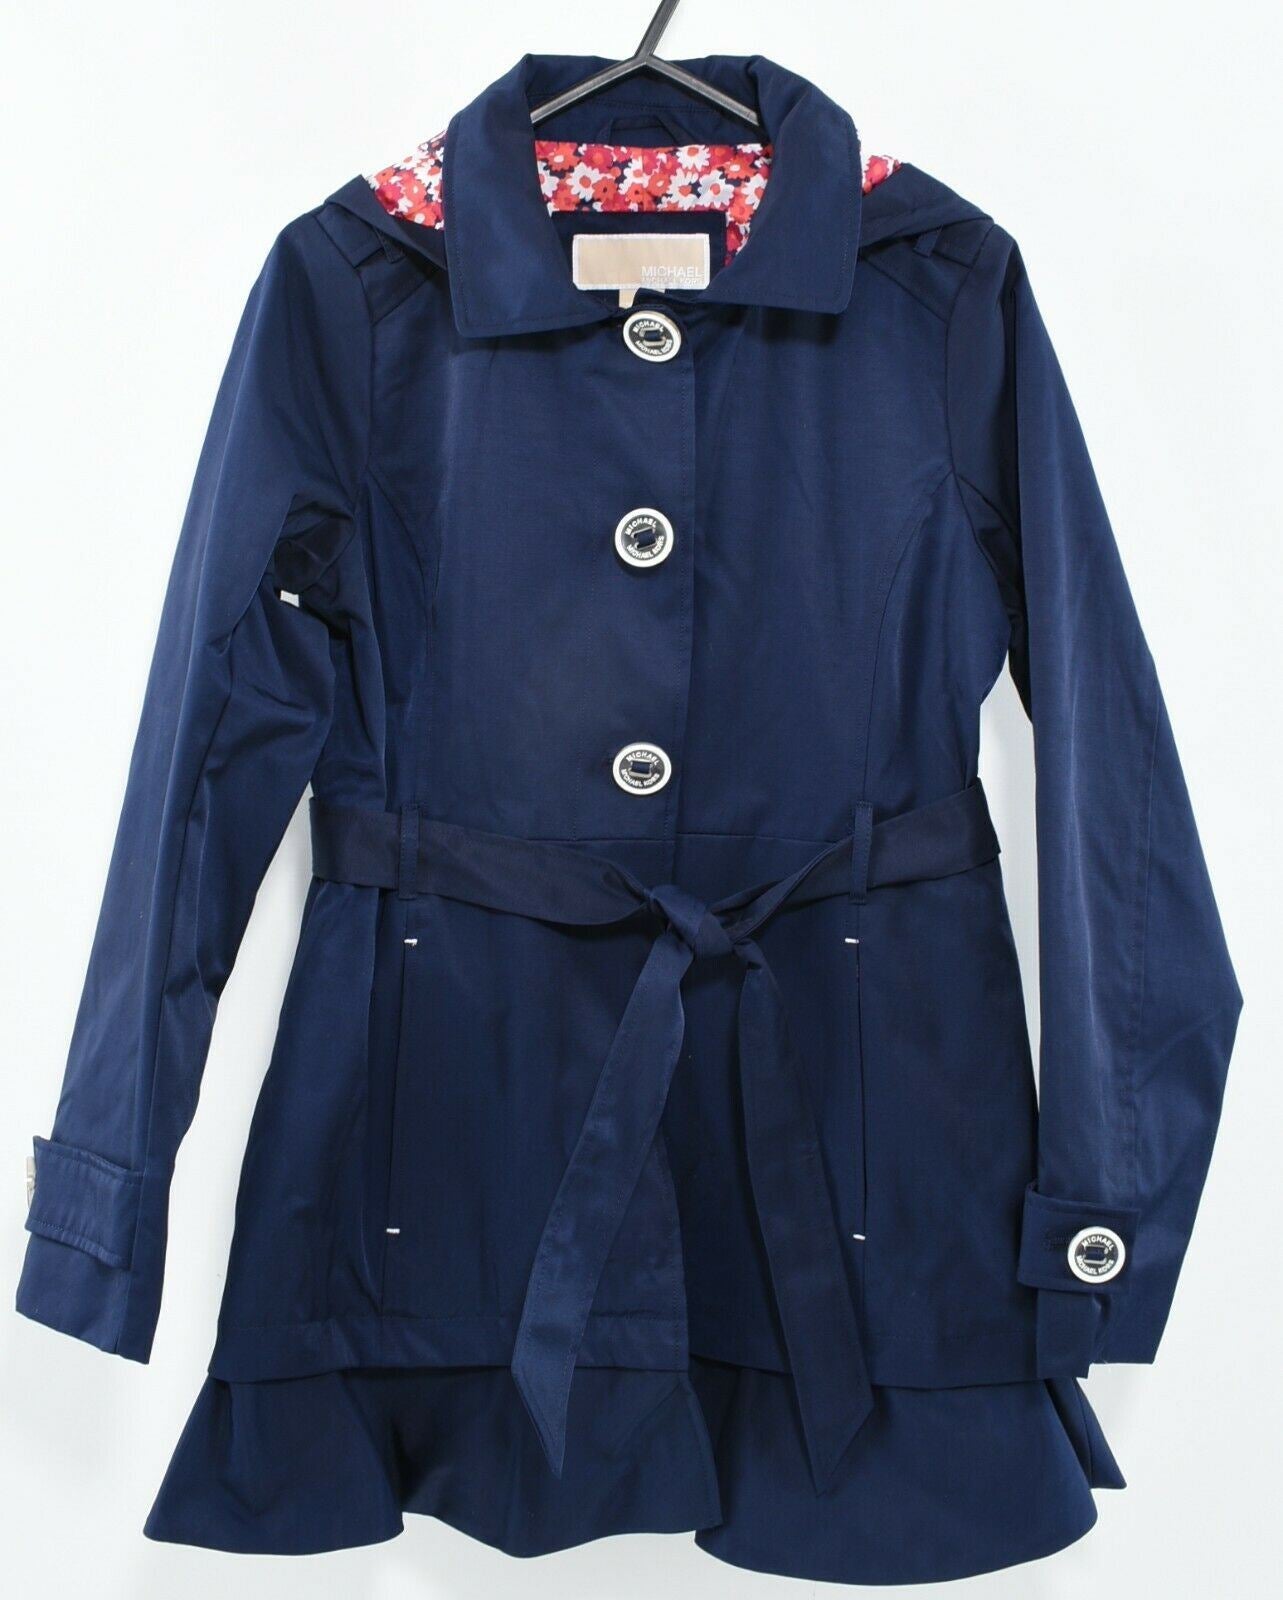 MICHAEL KORS Girls' Mac, Trench Coat / Jacket, Navy Blue, size 5-6 years